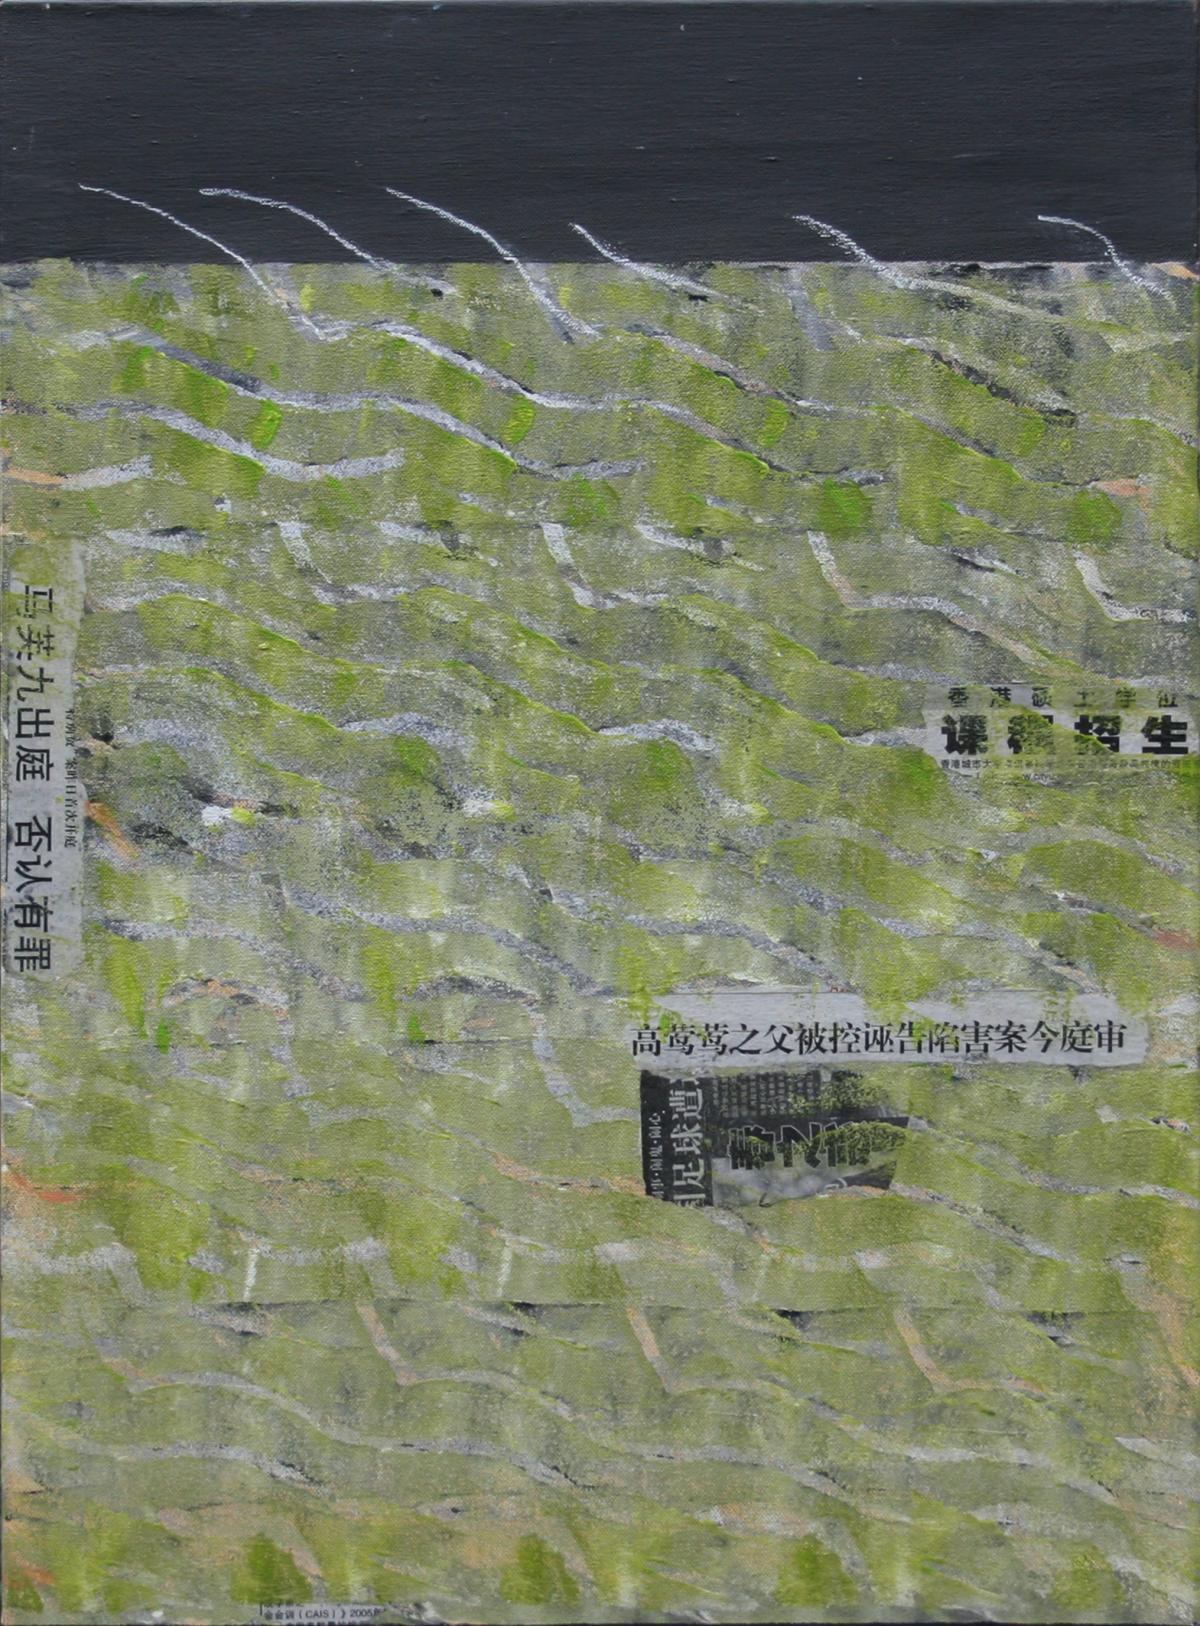 Am großen Fluss 2, 2007, Mischtechnik auf Leinwand, 70 x 50 cm